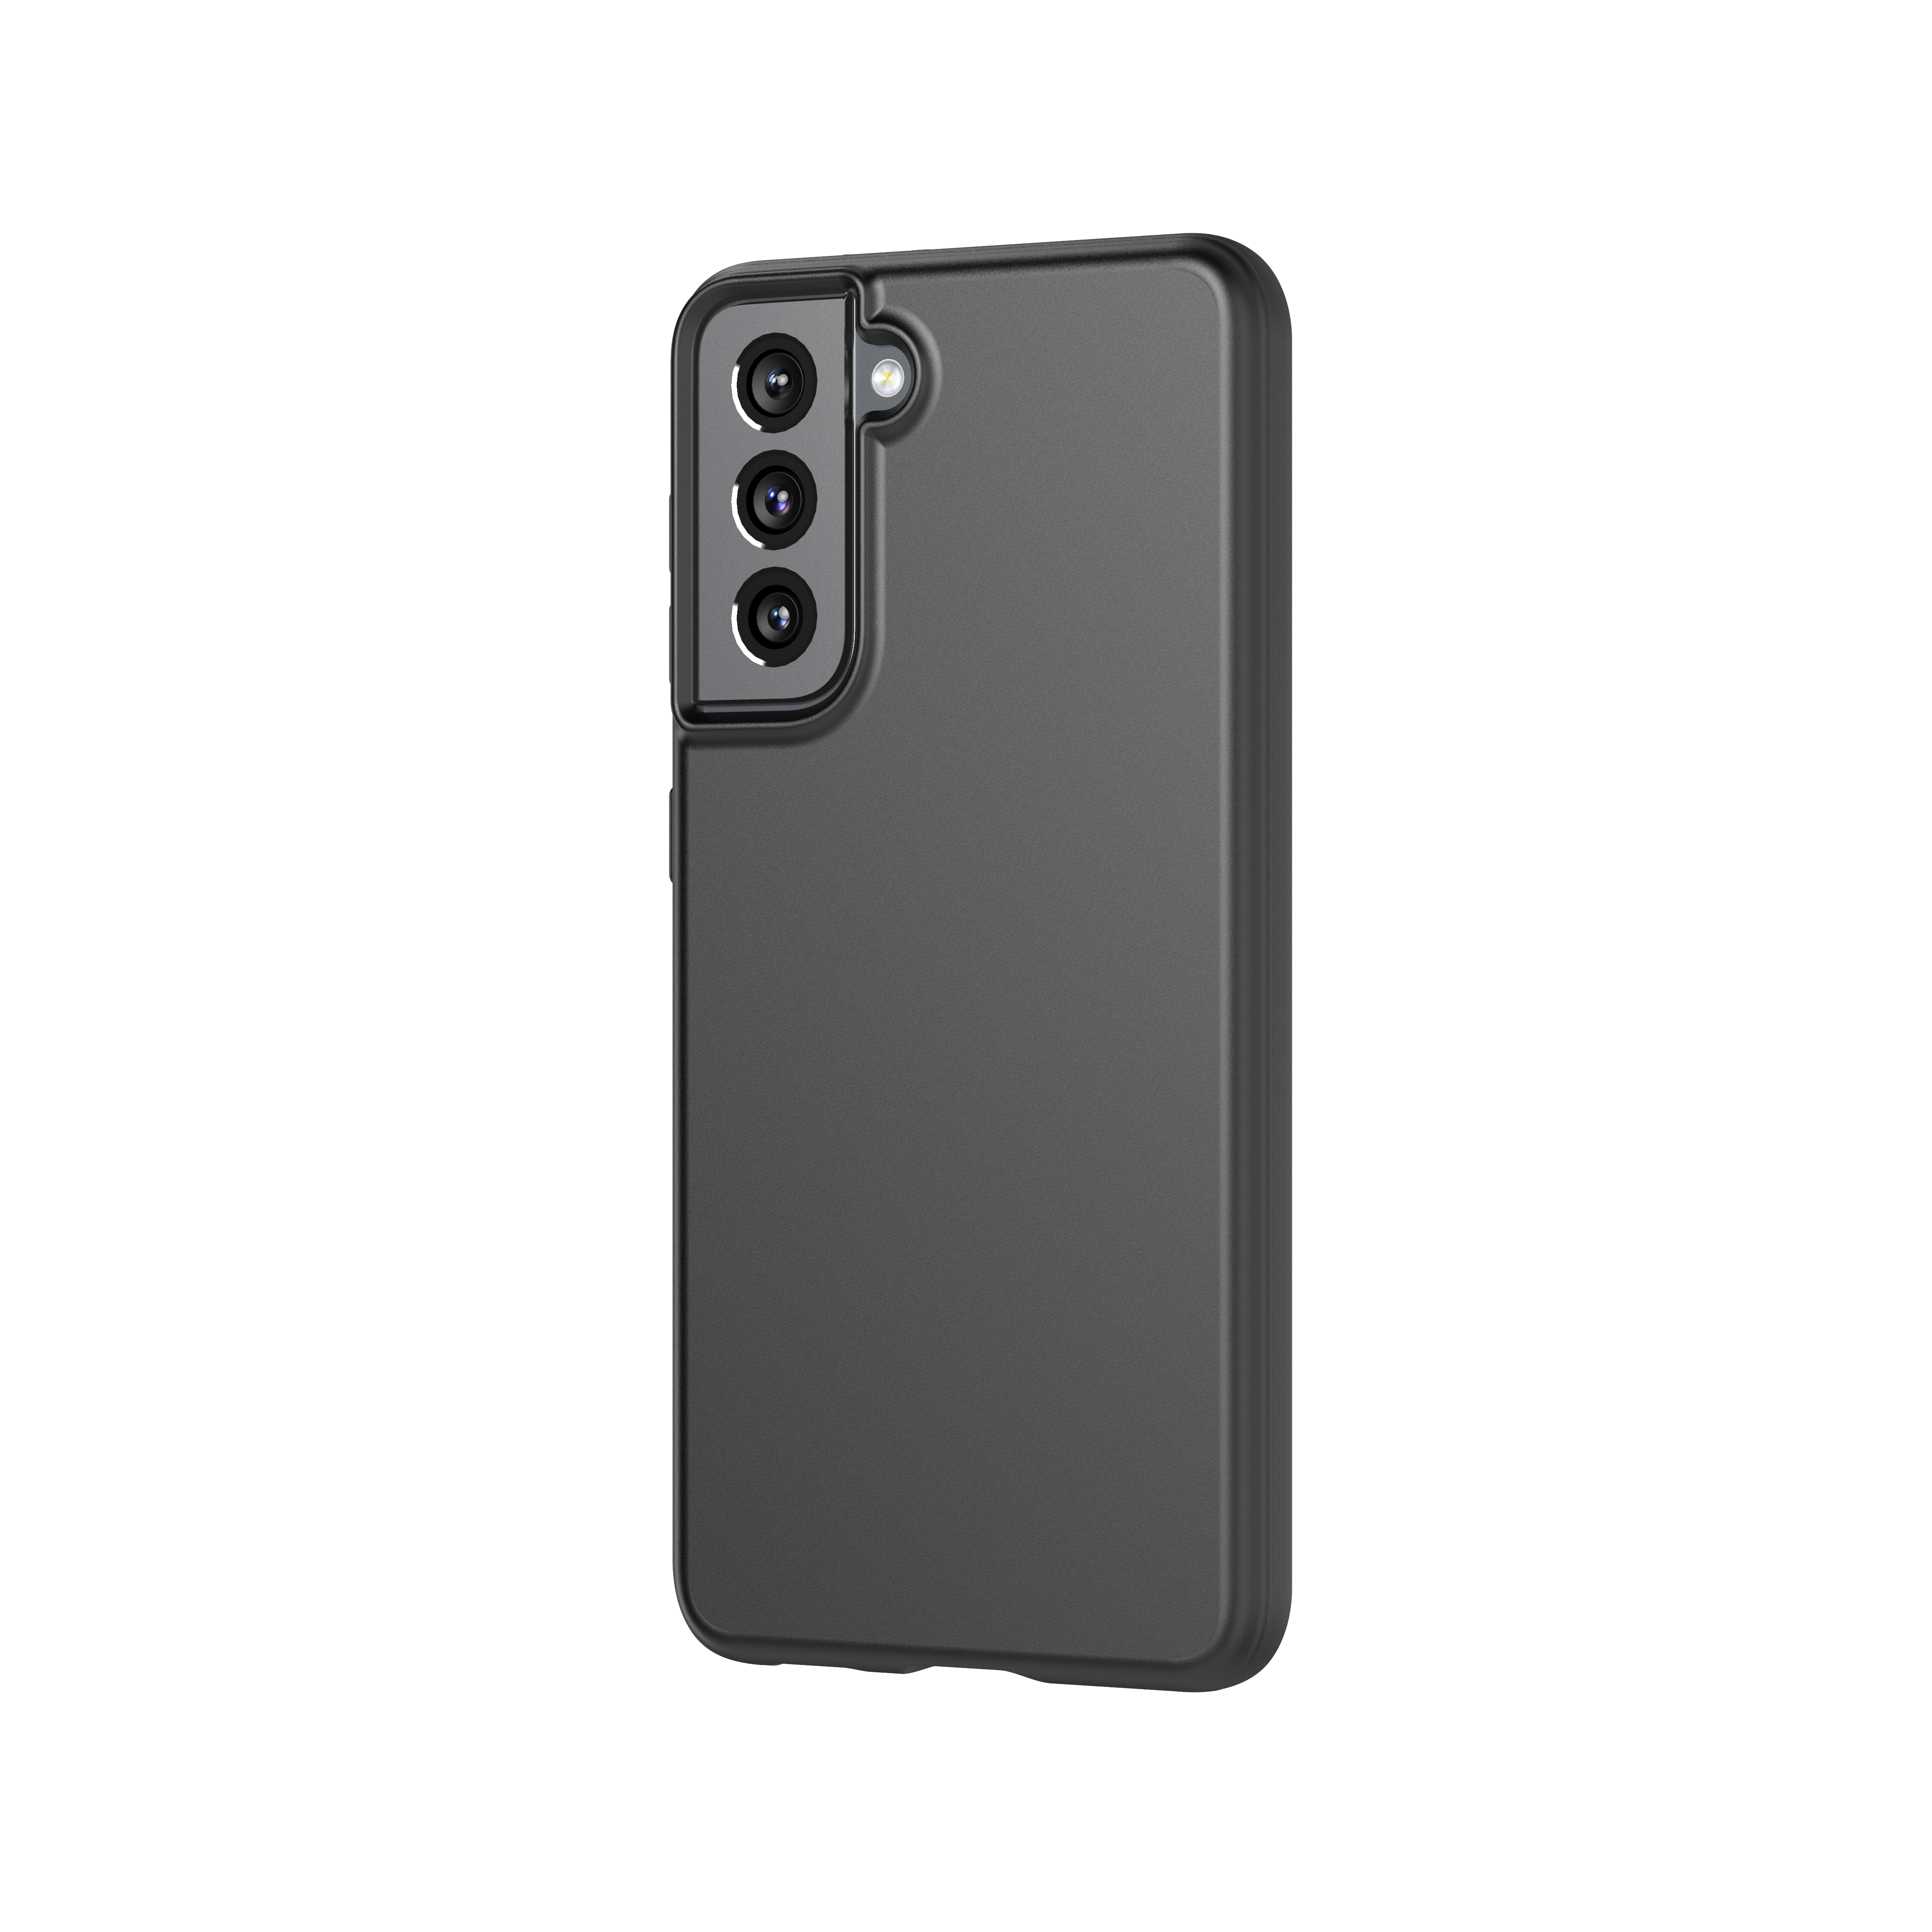 Evo Slim Case Galaxy S21 Charcoal Black